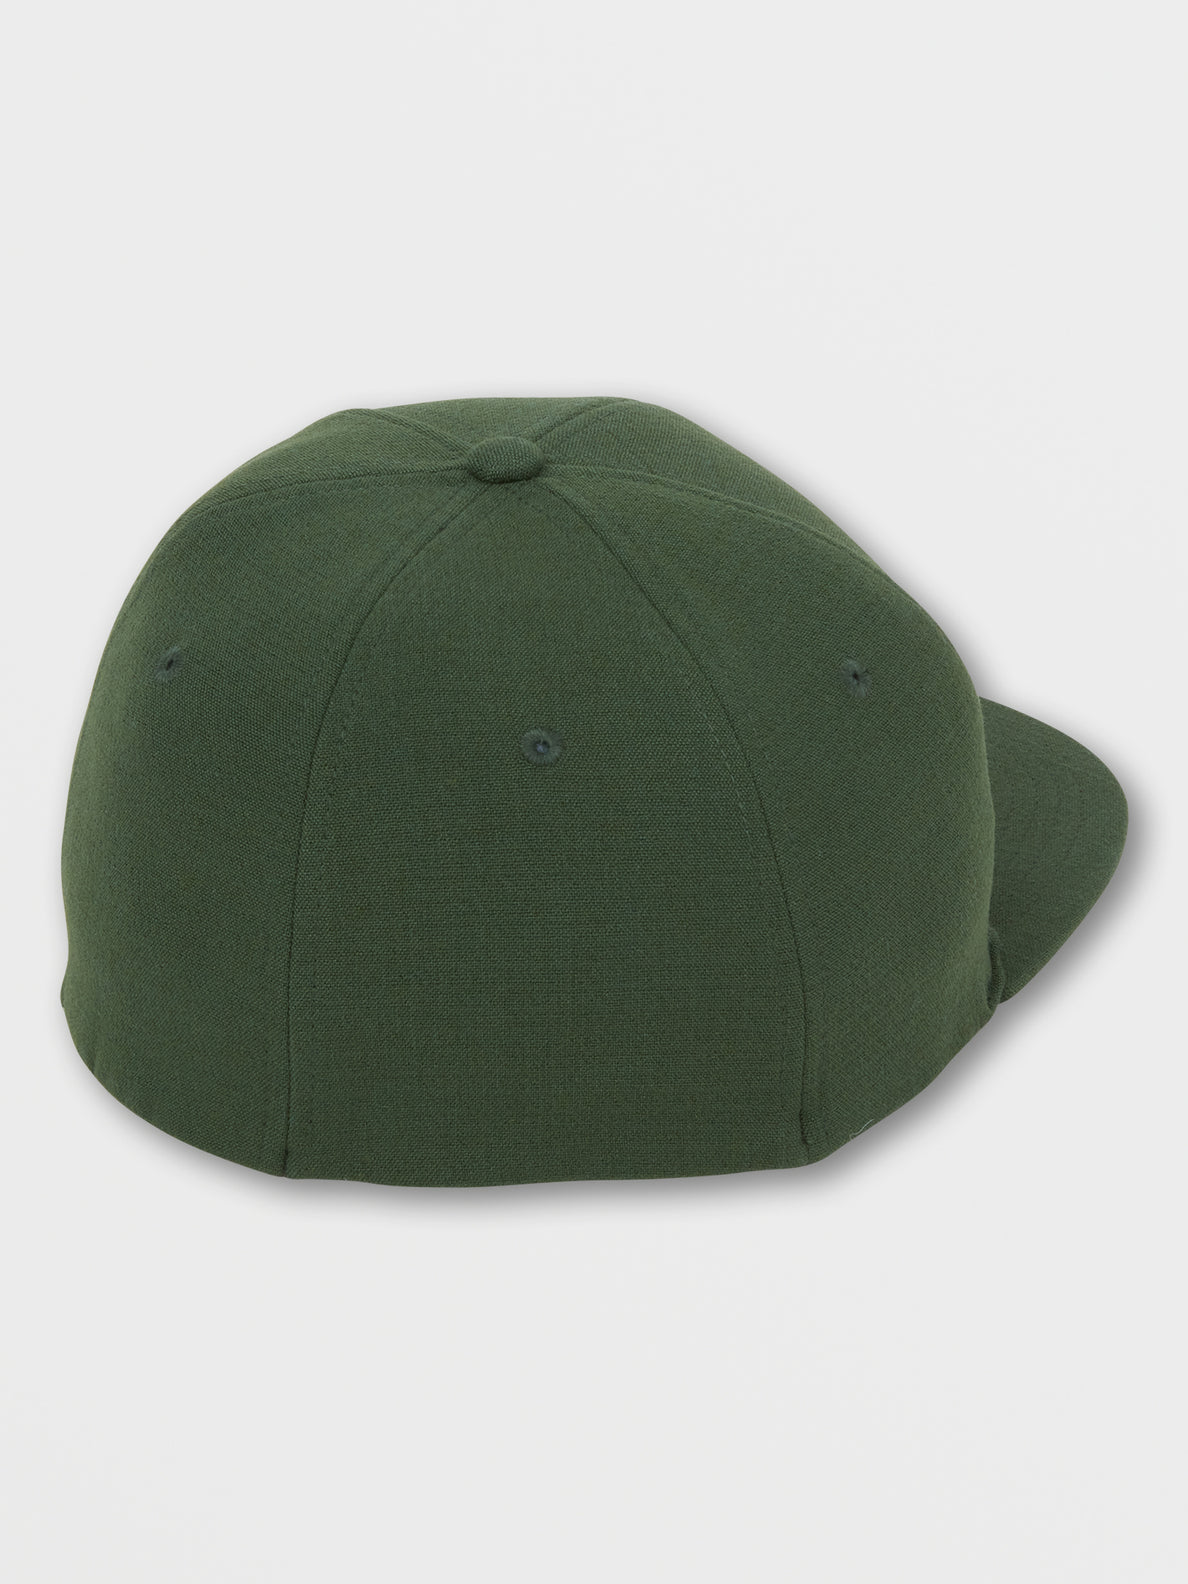 V Full Stone Xfit 2 Hat - Trekking Green